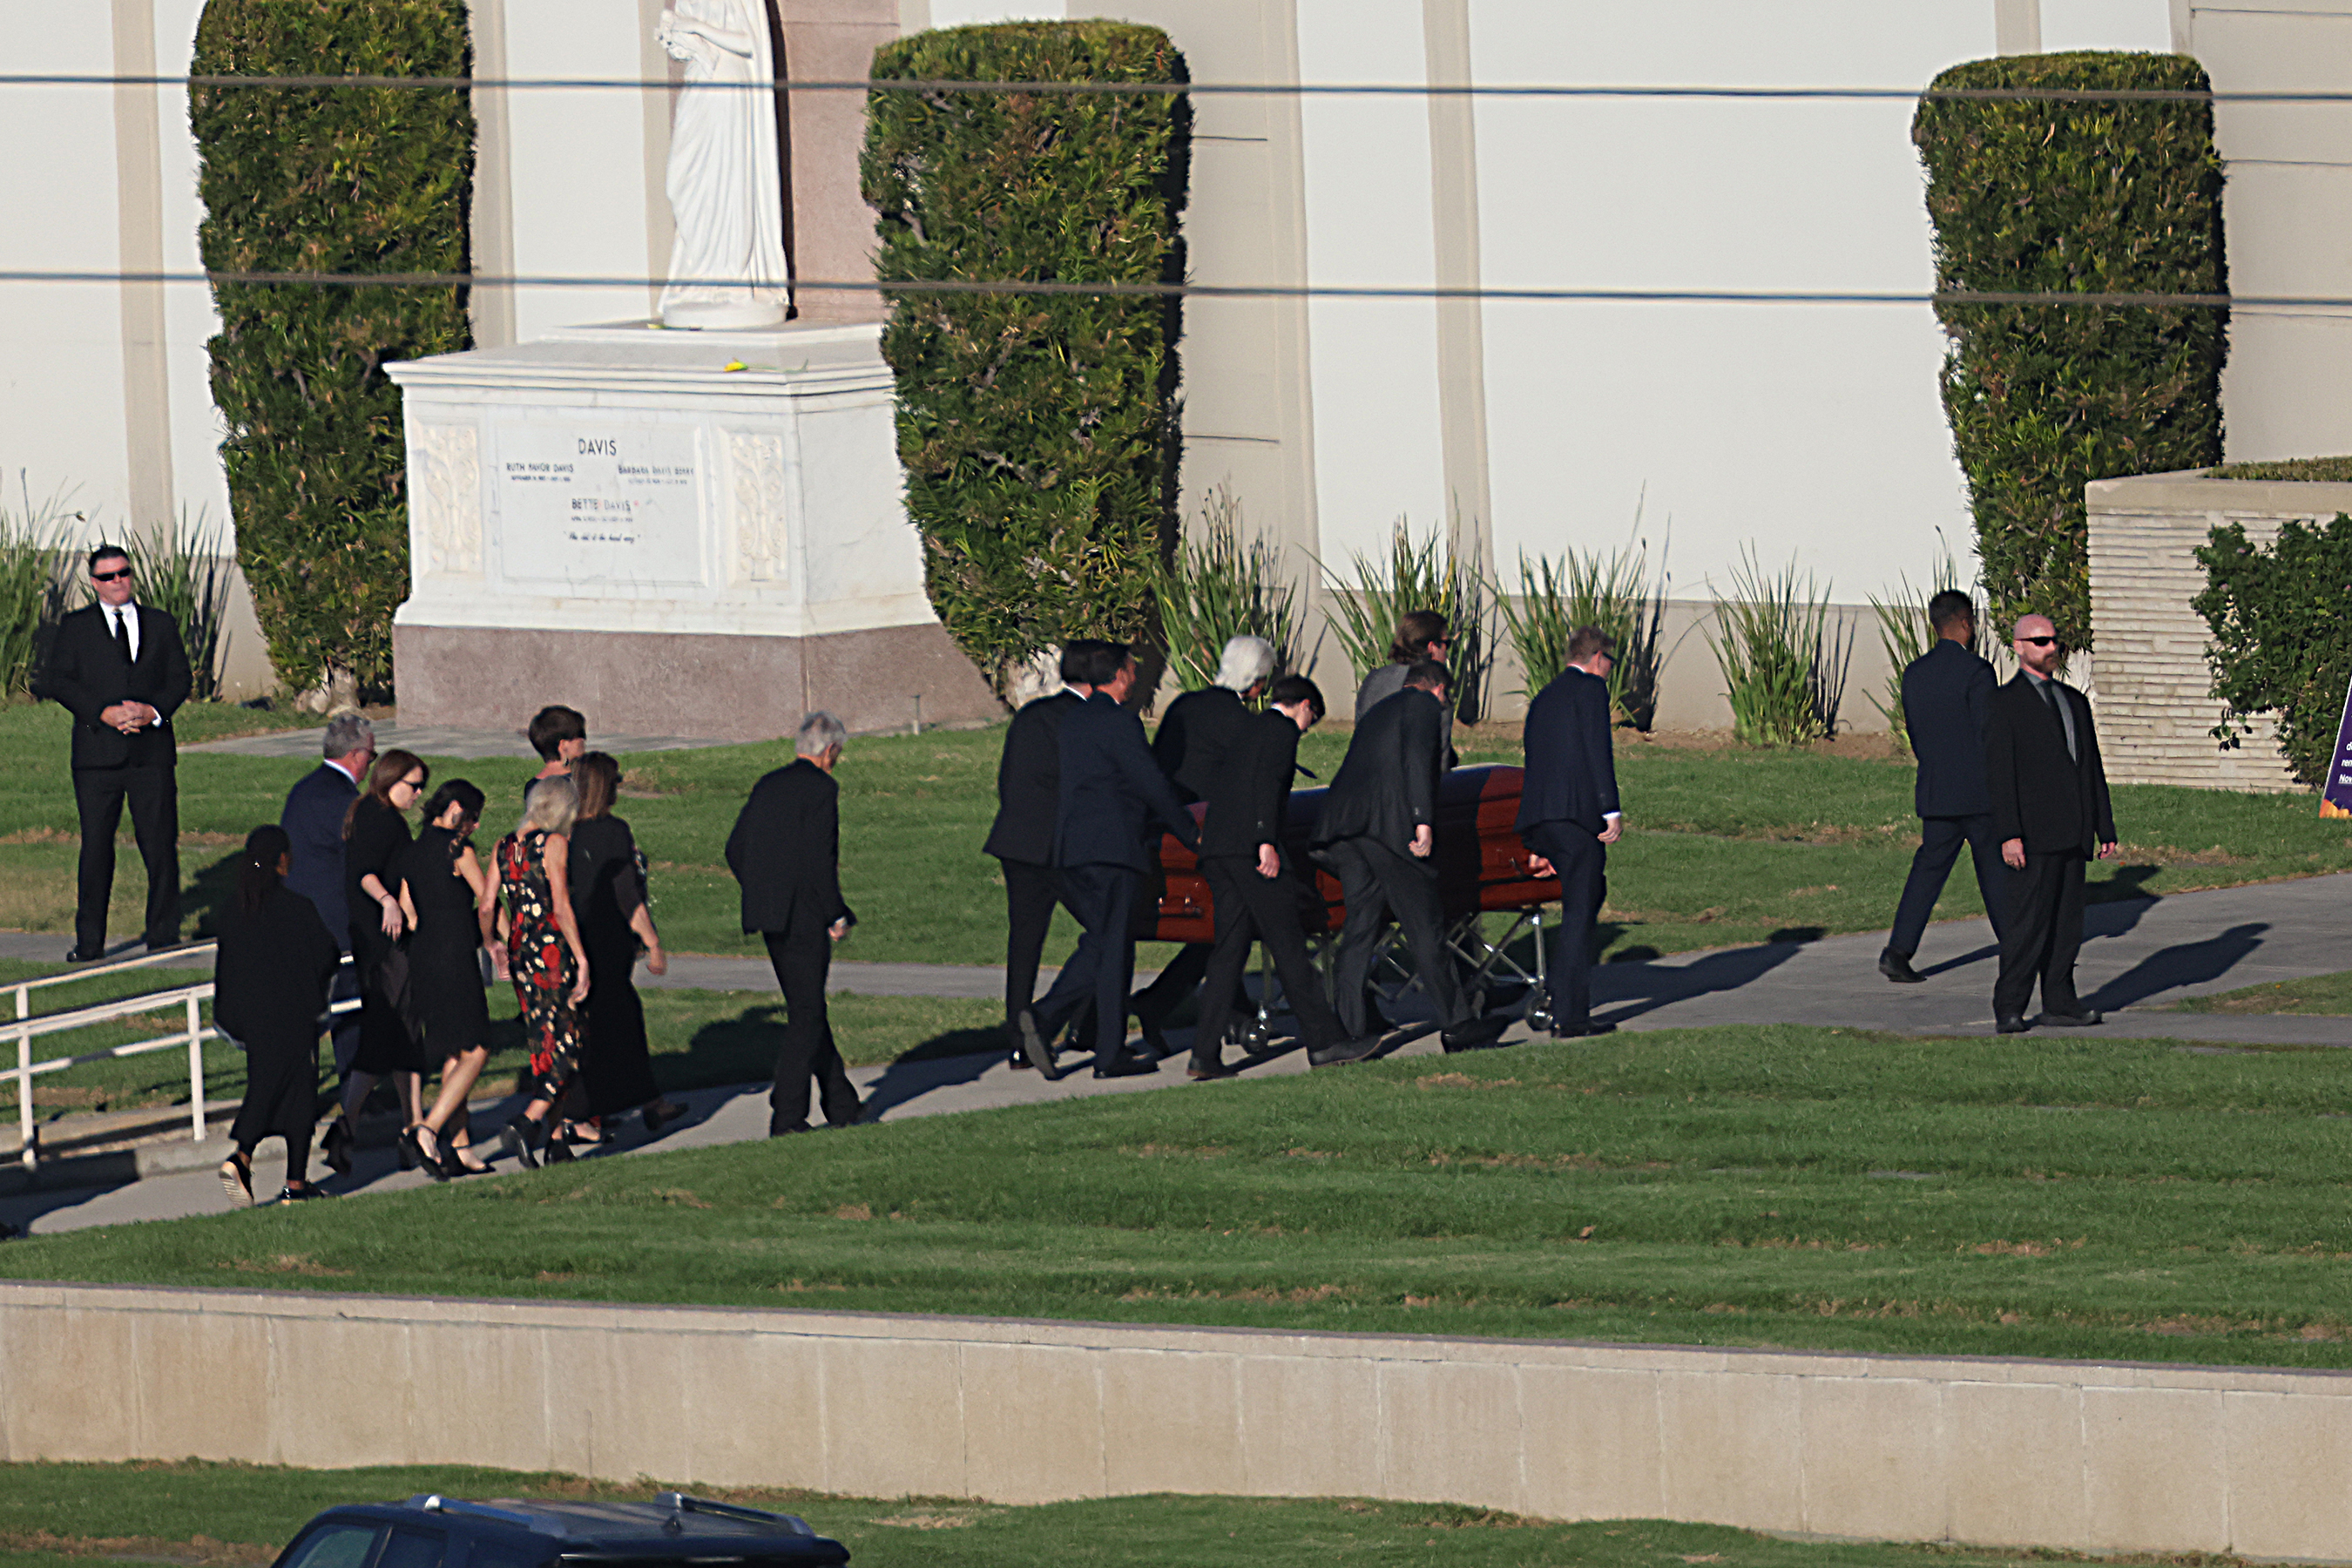 Matthews Beerdigung fand am 3. November statt